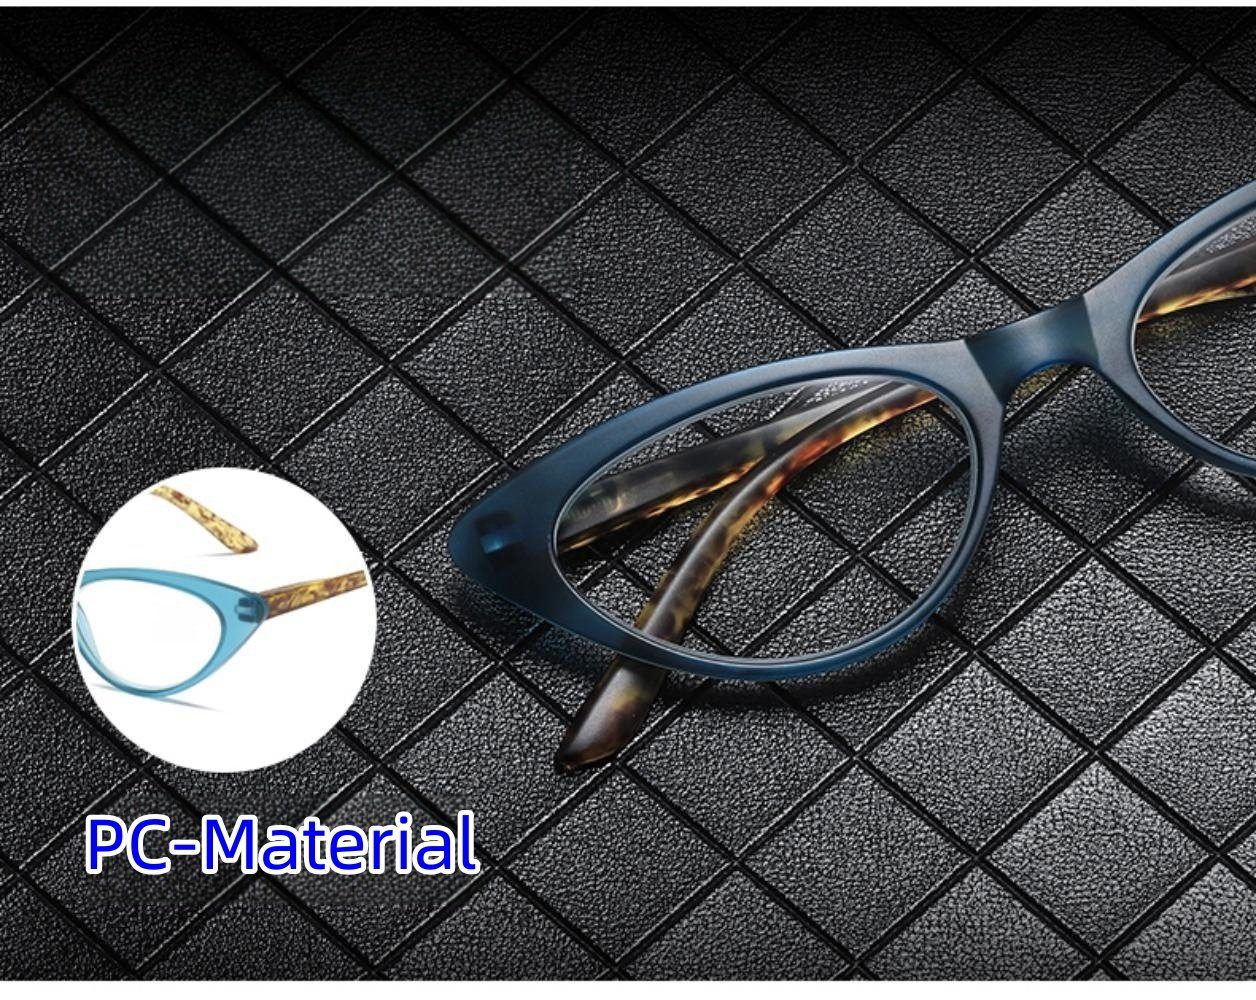 Mode anti presbyopische Rahmen Lesebrille grau PACIEA Gläser bedruckte blaue